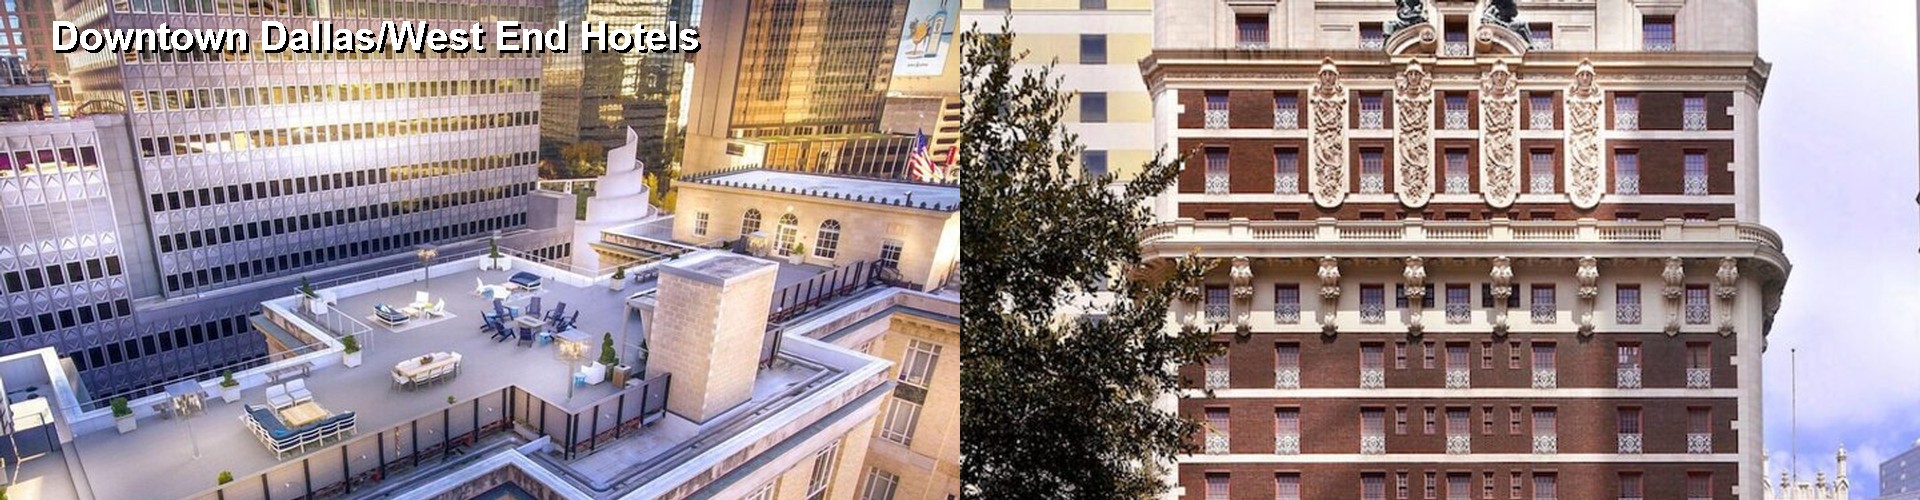 5 Best Hotels near Downtown Dallas/West End